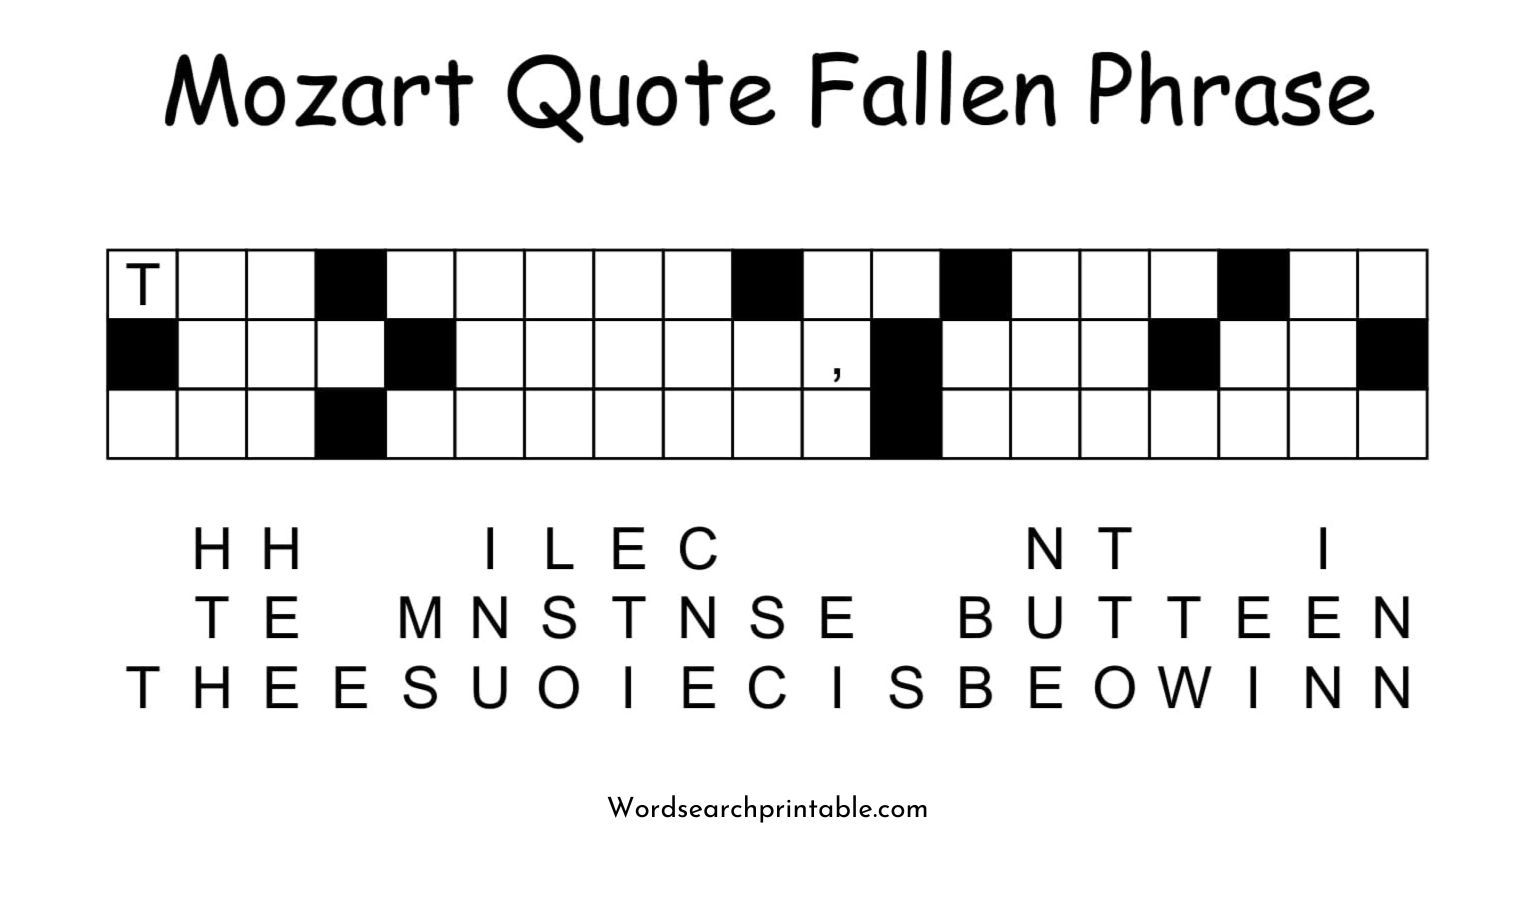 mozart quote fallen phrase puzzle